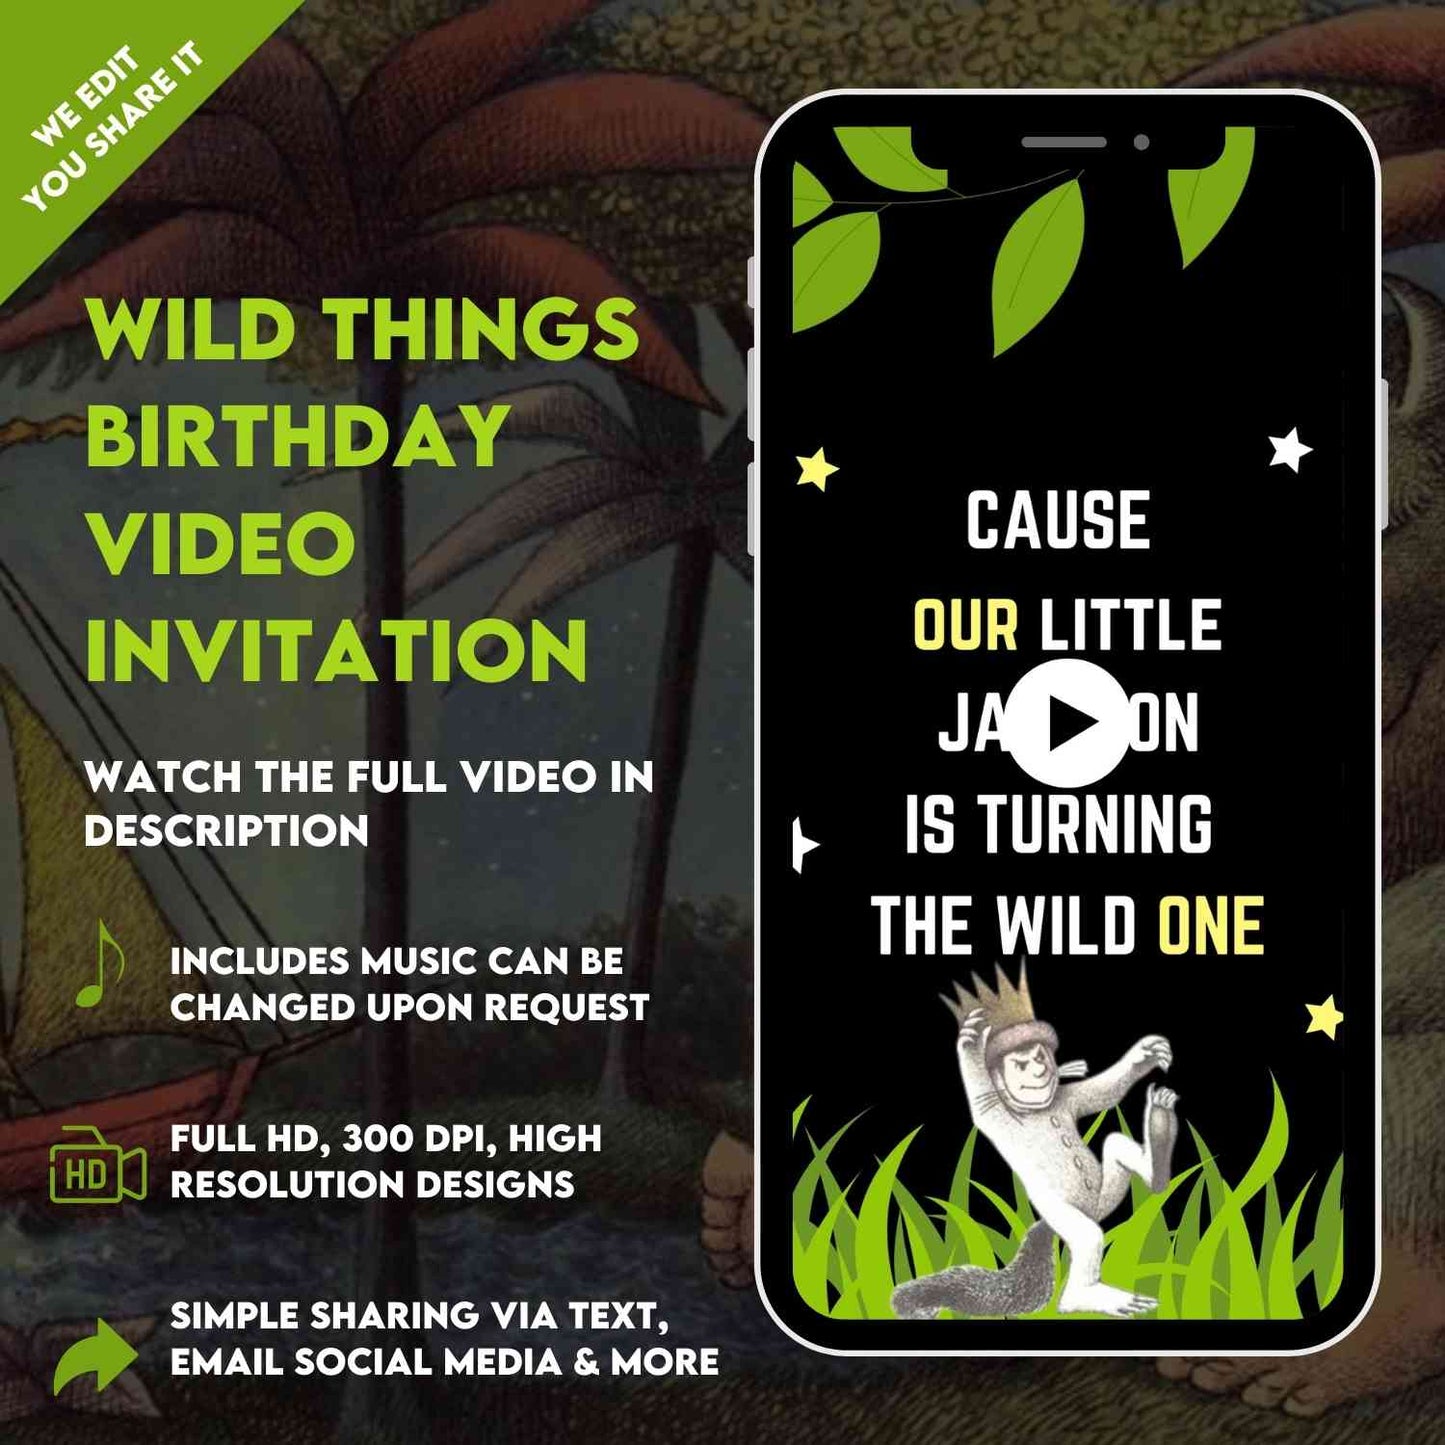 Wild Things Birthday Video Invitation | Personalized Wild Things birthday party invite